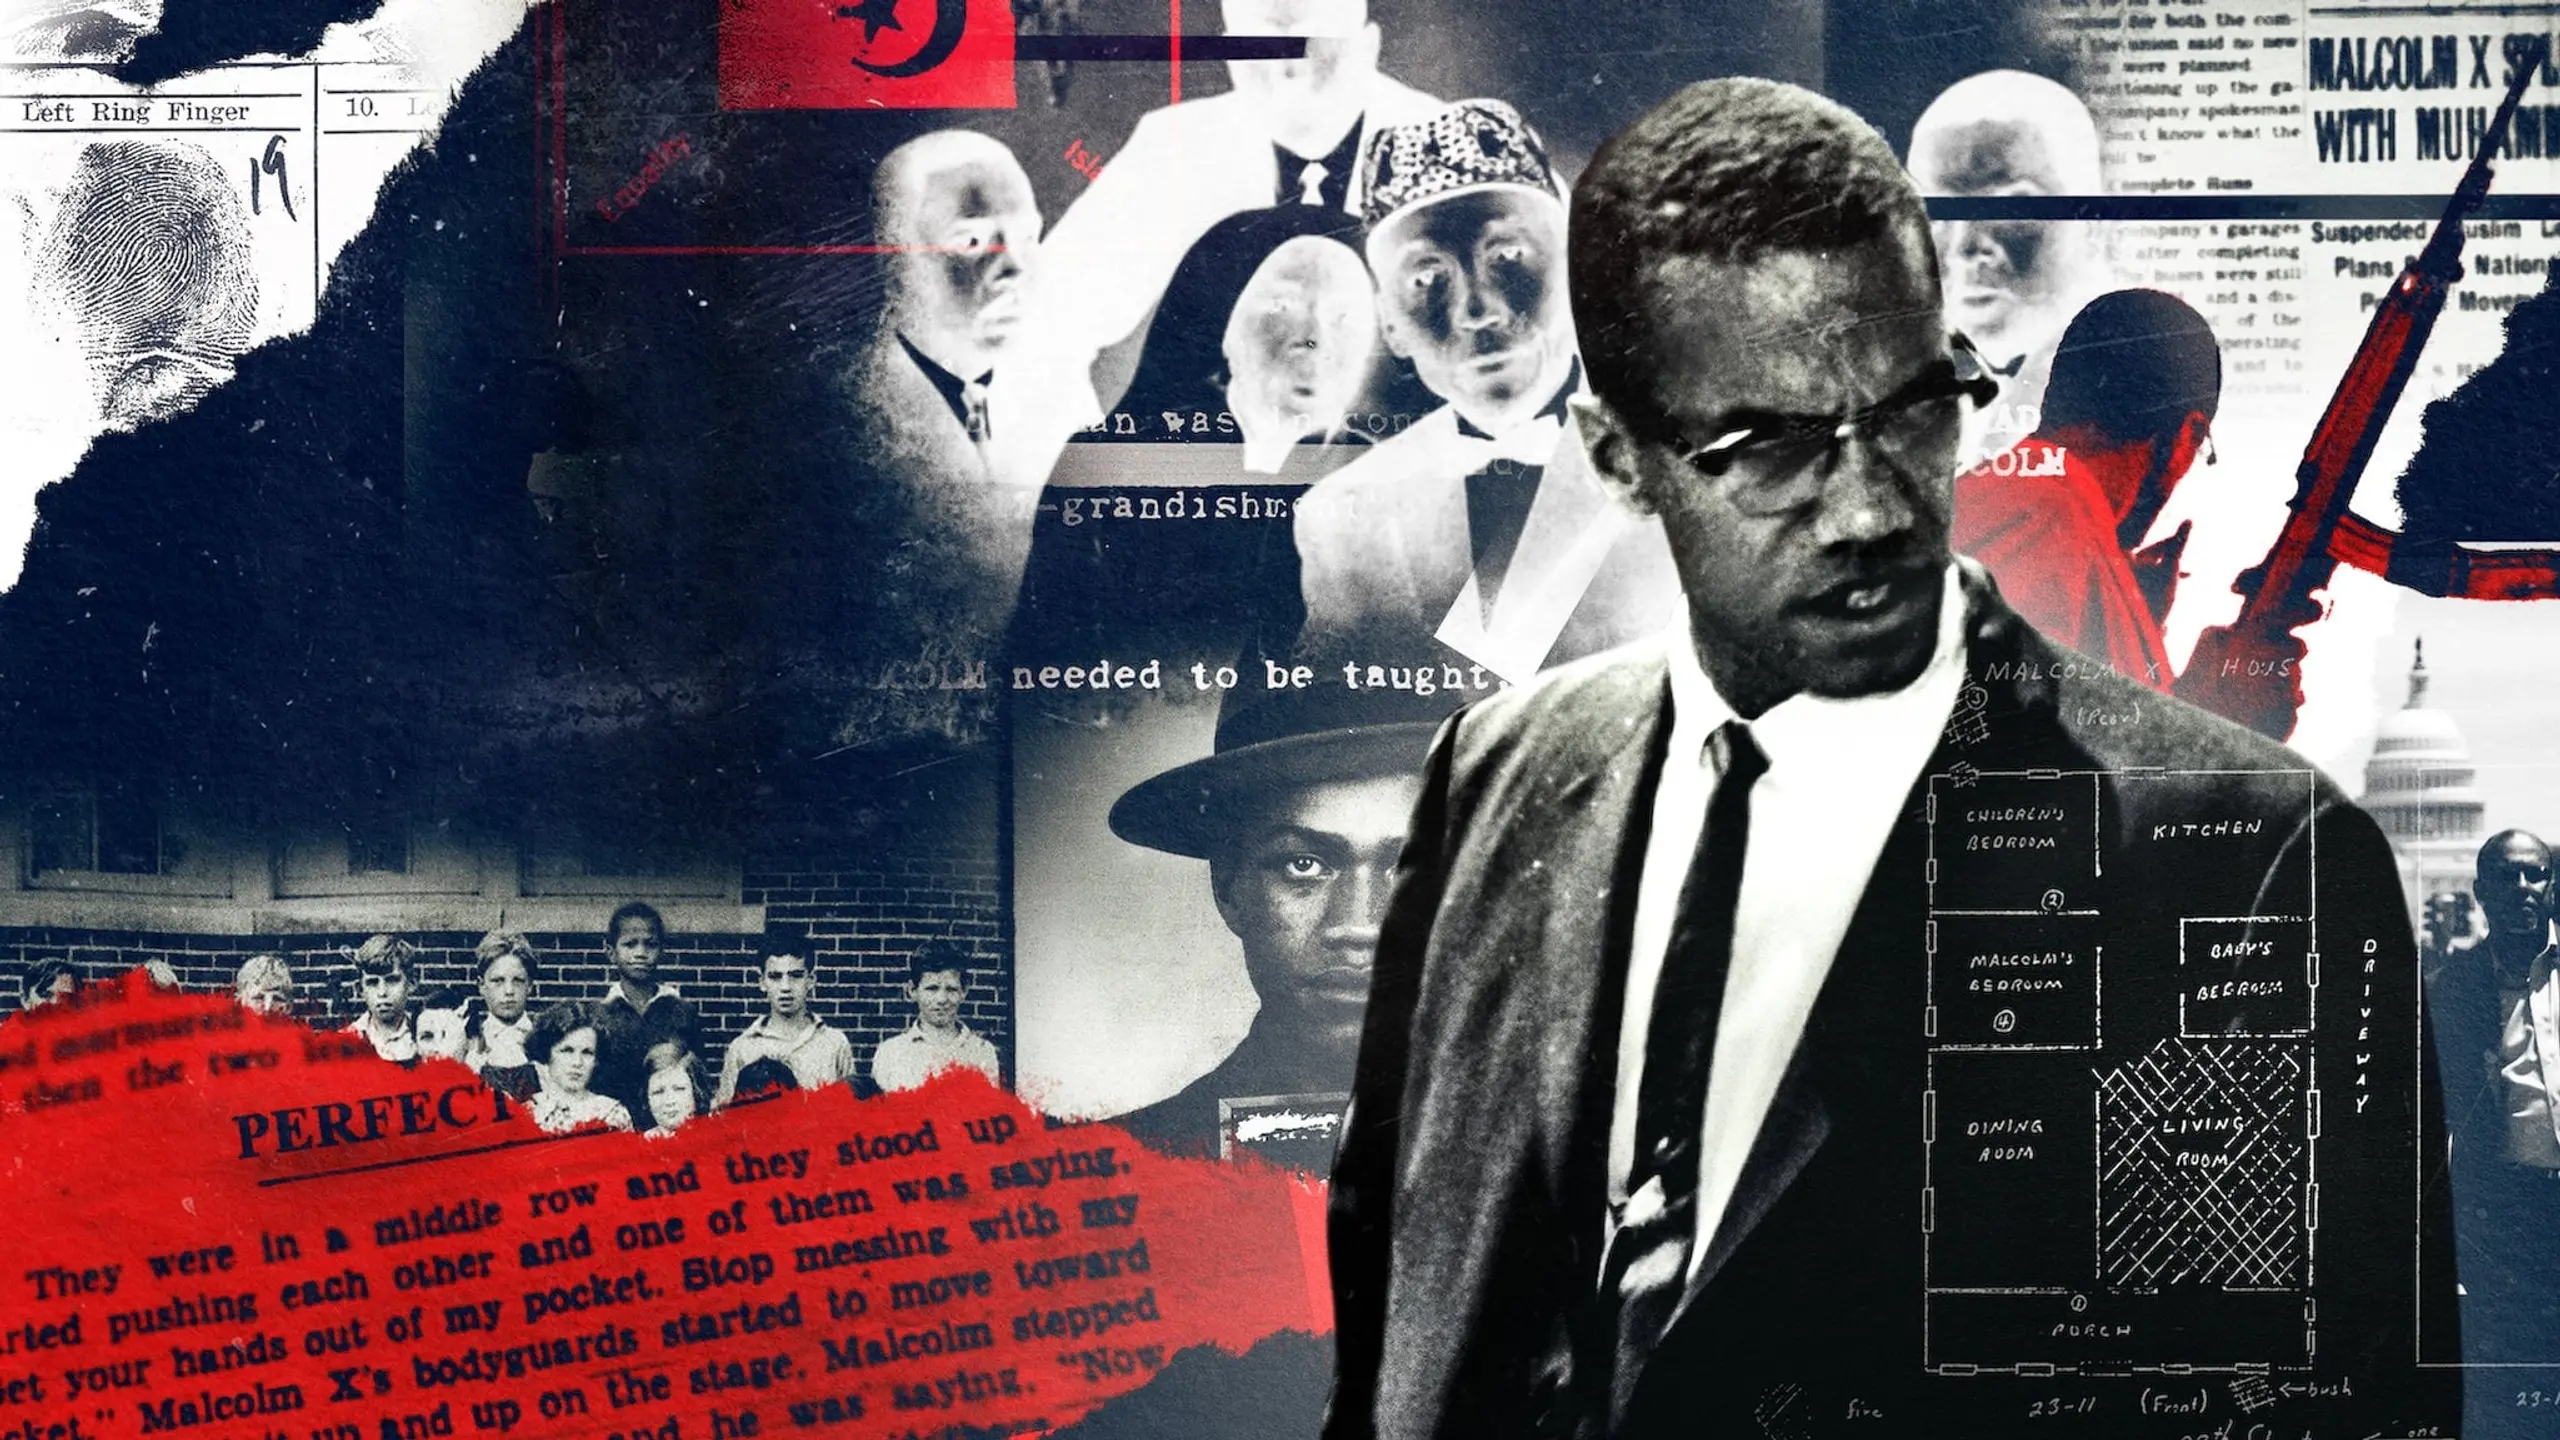 Wer hat Malcolm X umgebracht?